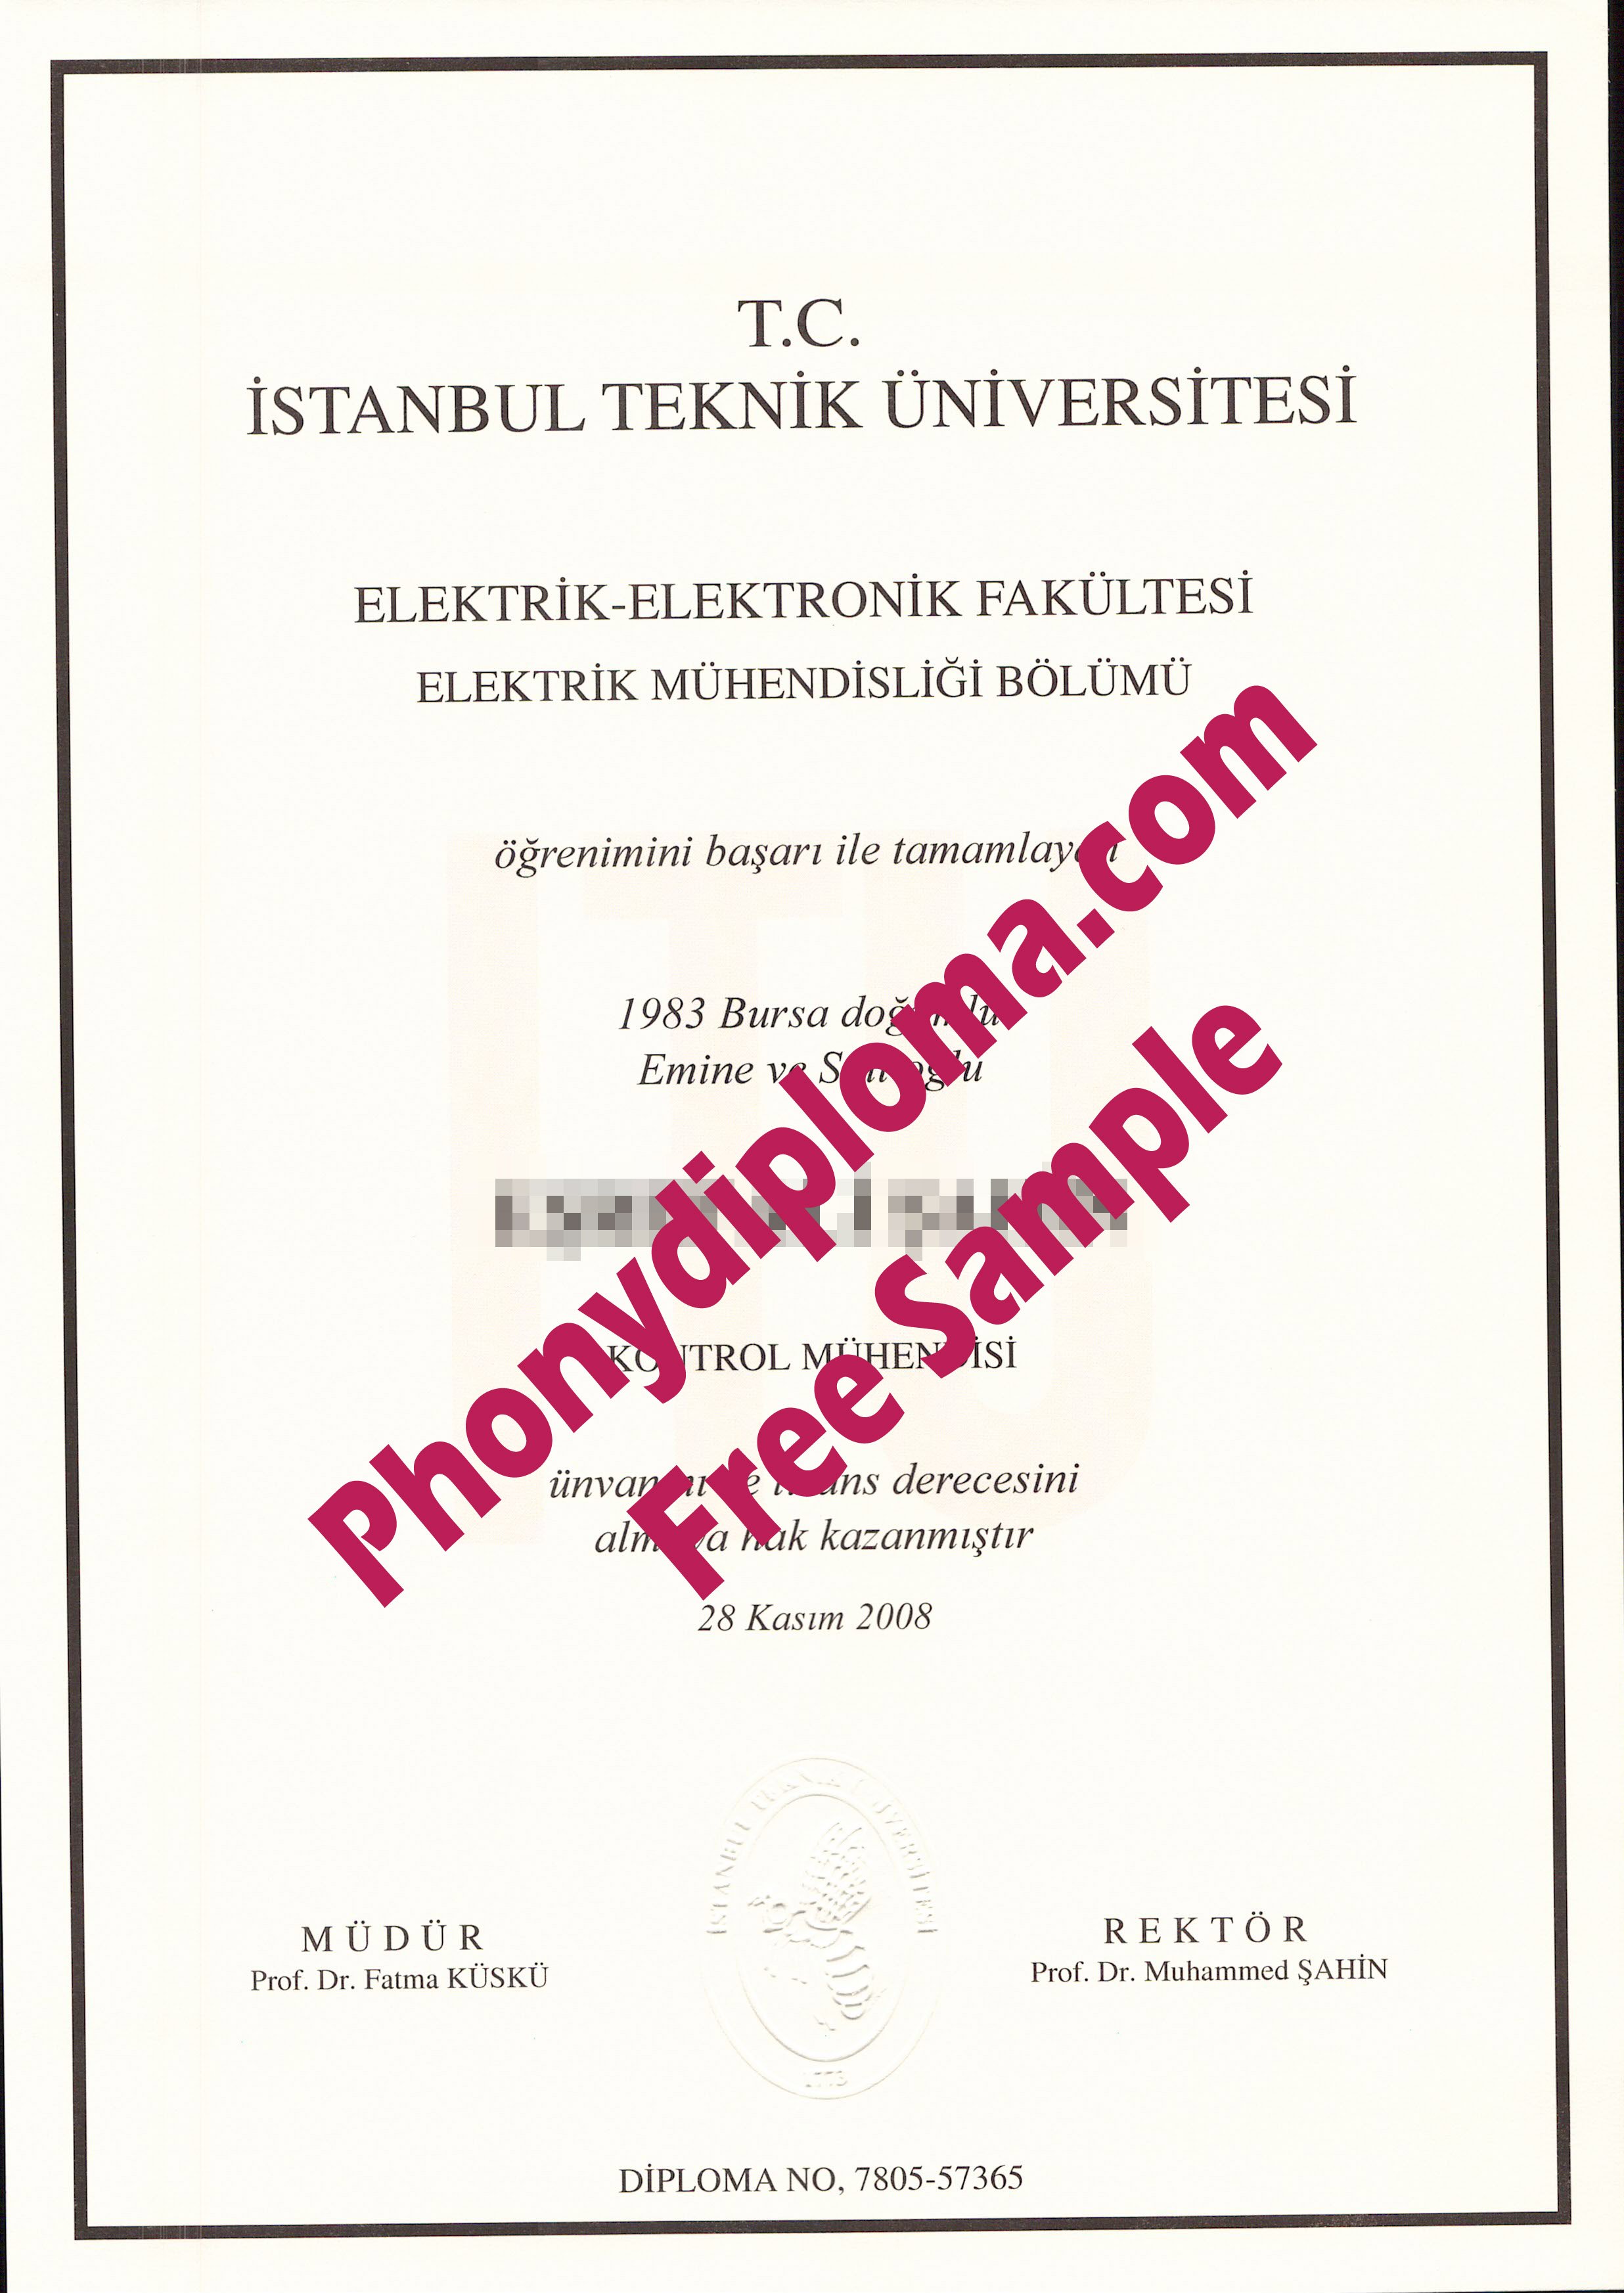 Istanbul Teknik Universitesi Turkey Free Sample From Phonydiploma